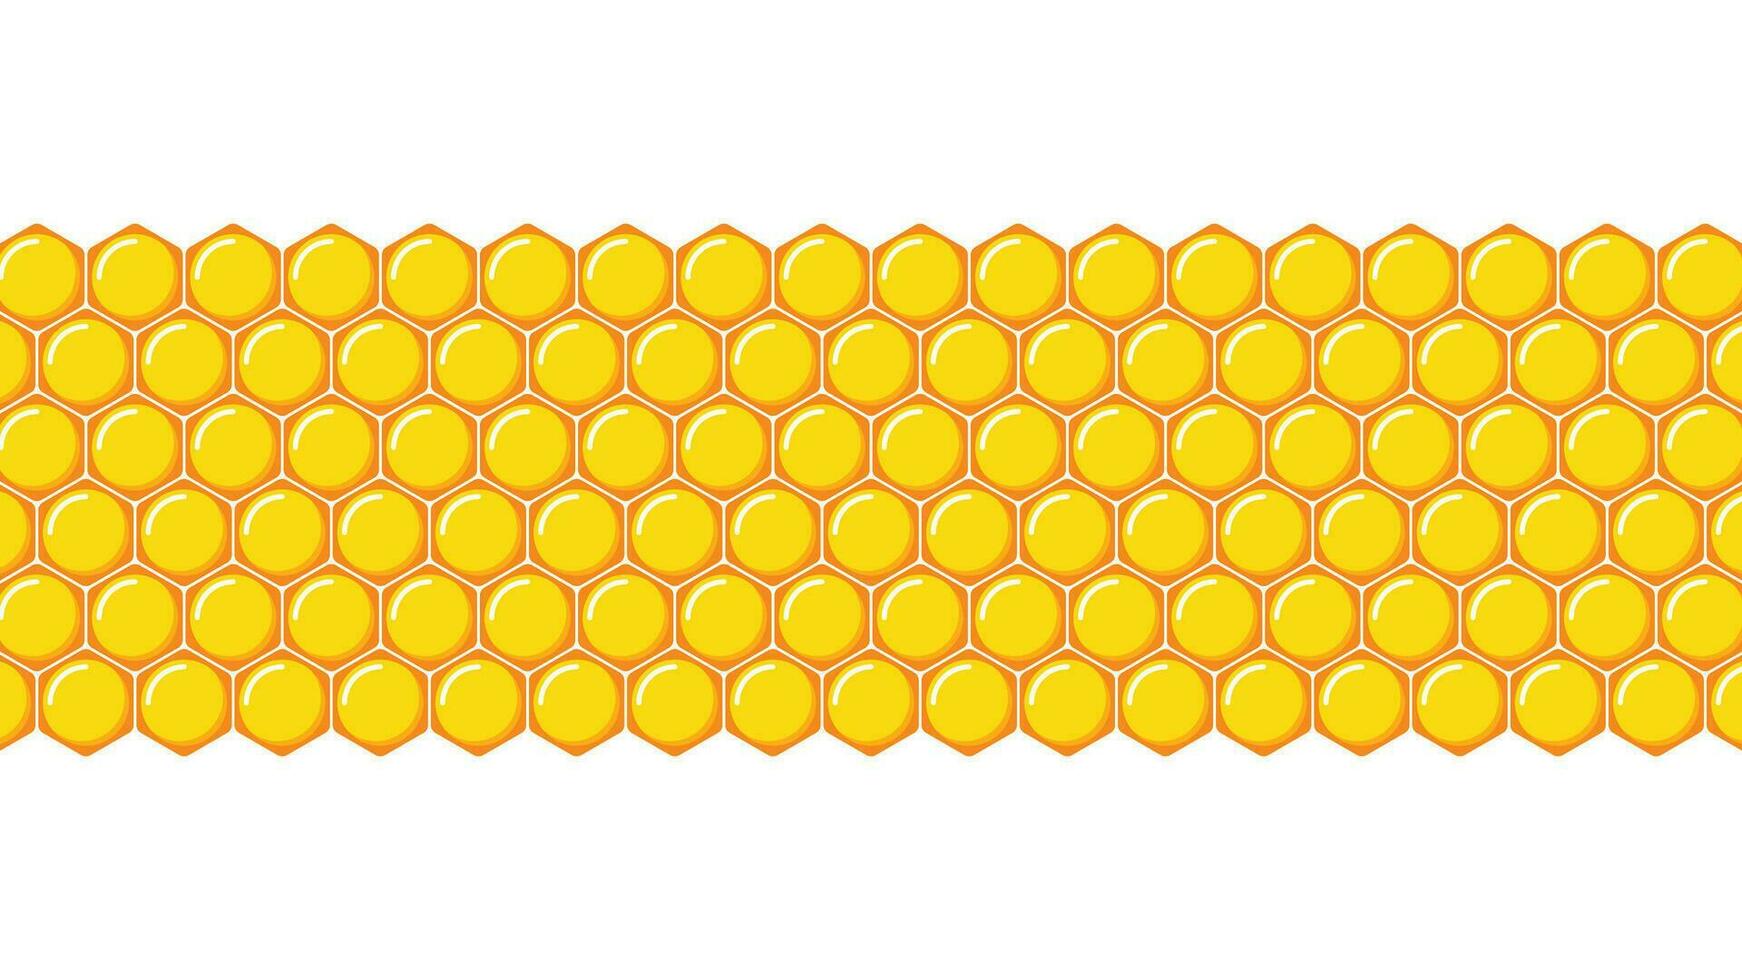 Honeycomb pattern wallpaper. Honeycomb background vector. vector